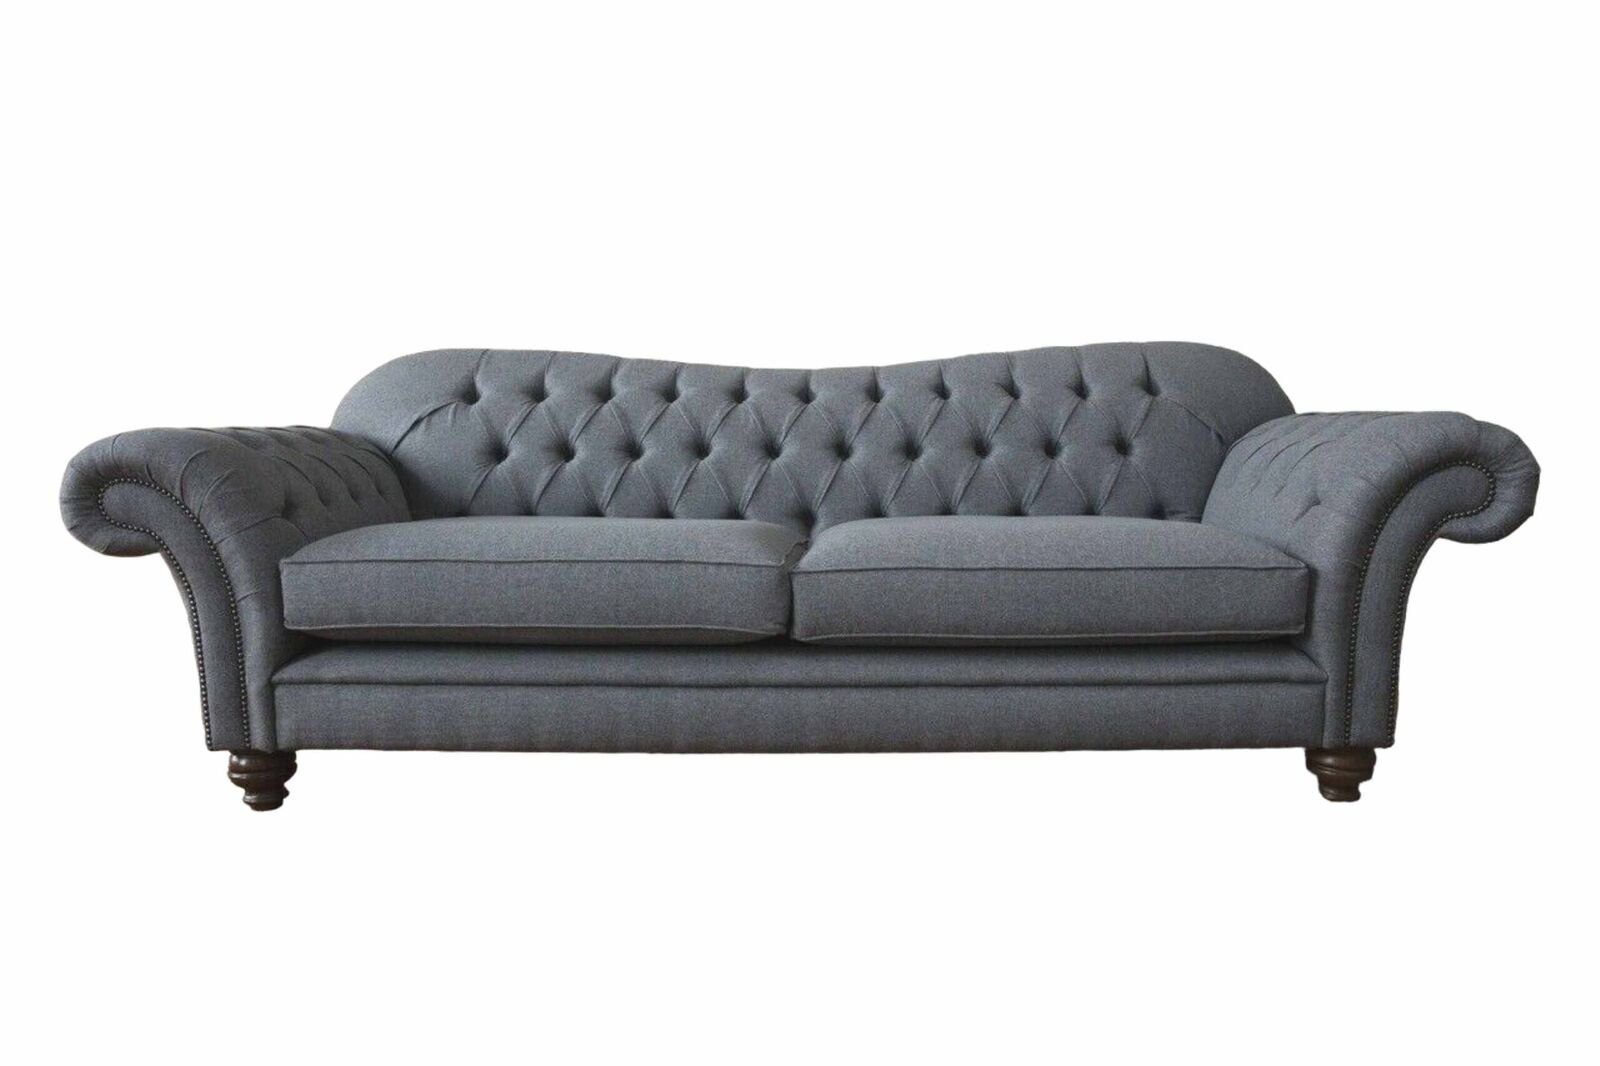 JVmoebel Sofa Sitzer Europe Sofas Polster Neu, Grau Stoff Luxus Textil 3 Made Modernes Sofa Couch in